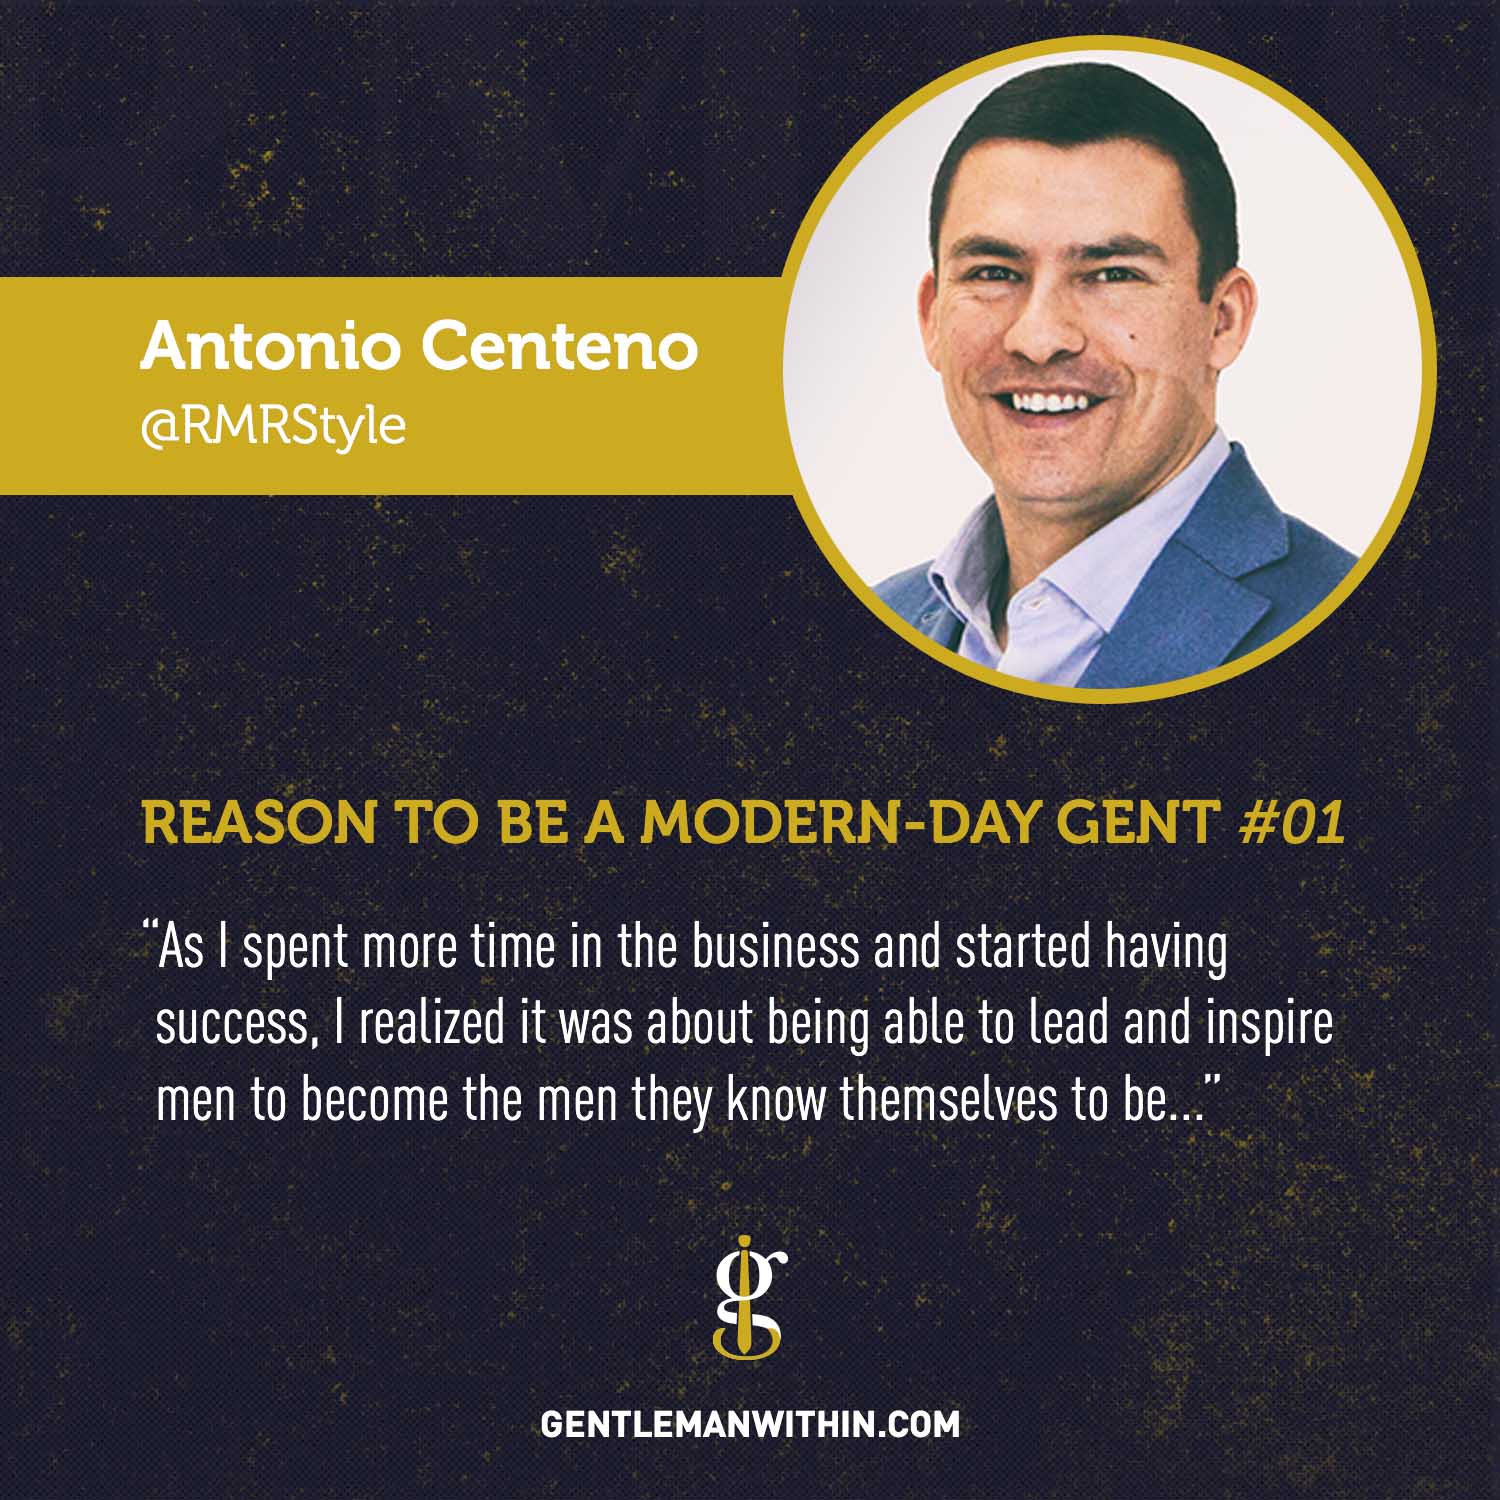 Antonio Centeno Reason To Be A Modern-Day Gentleman